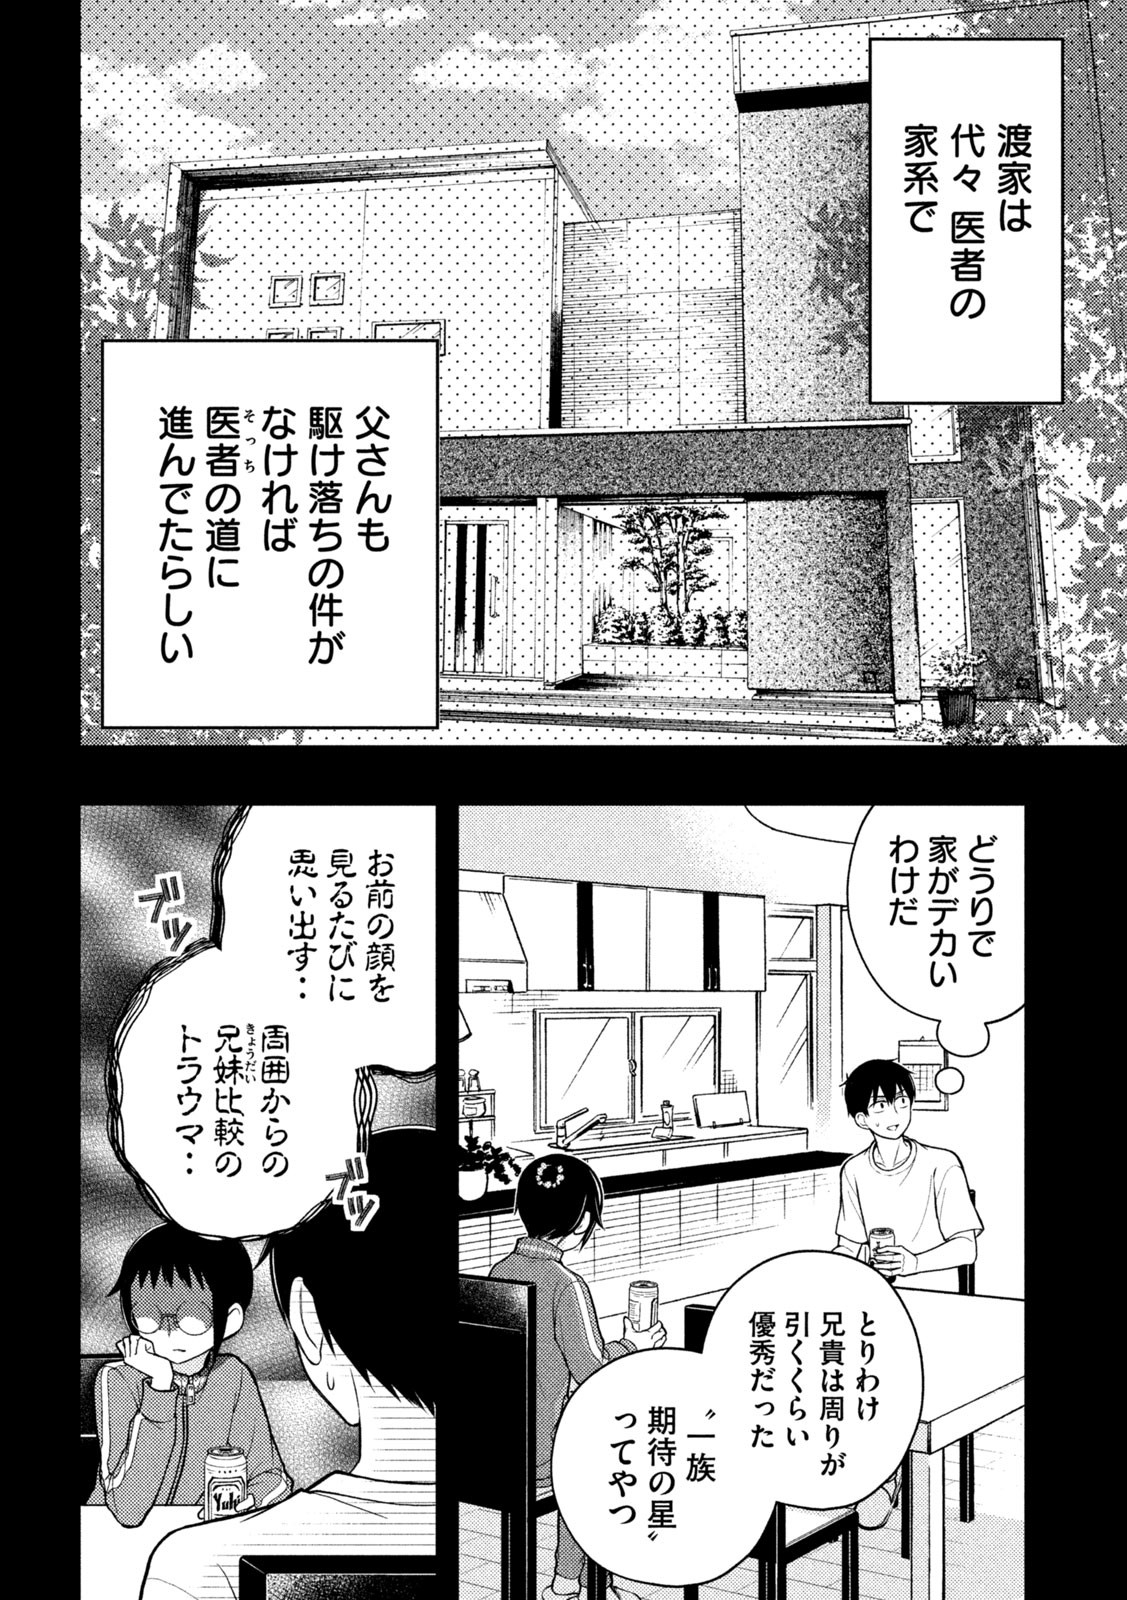 Watari-kun no xx ga Houkai Sunzen - Chapter 91 - Page 4